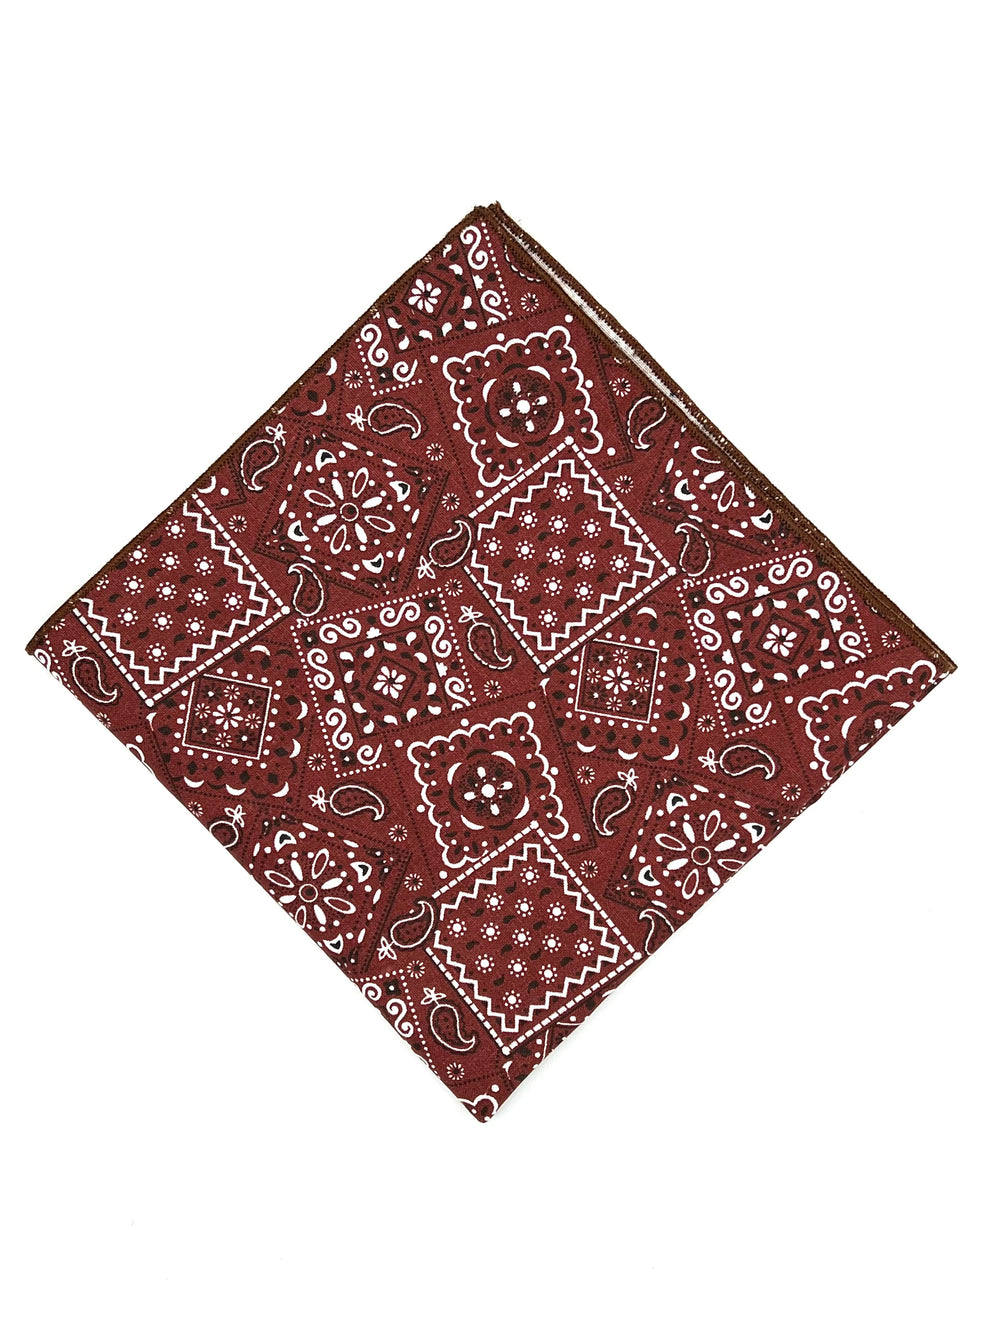 Rusty Brown Vintage Paisley Handkerchief